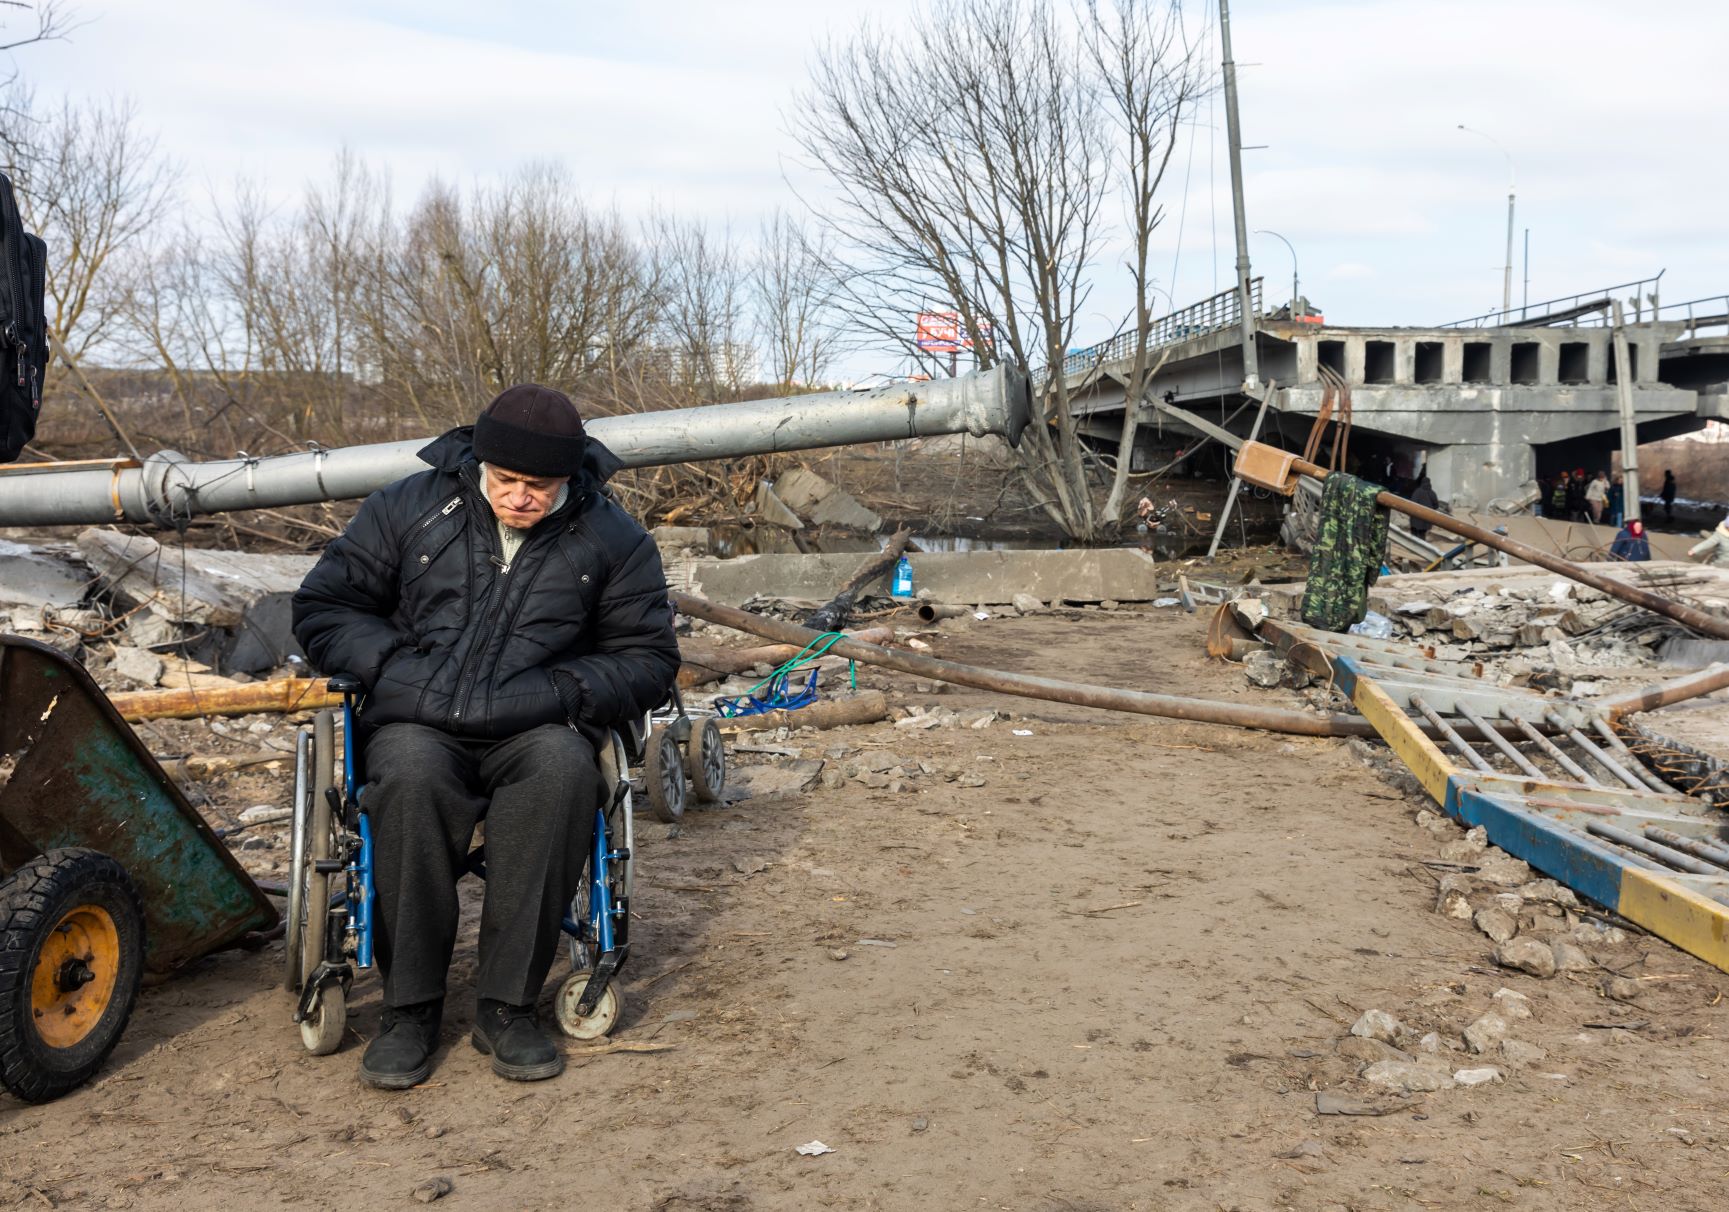 Man in wheelchair in front of bridge ruins